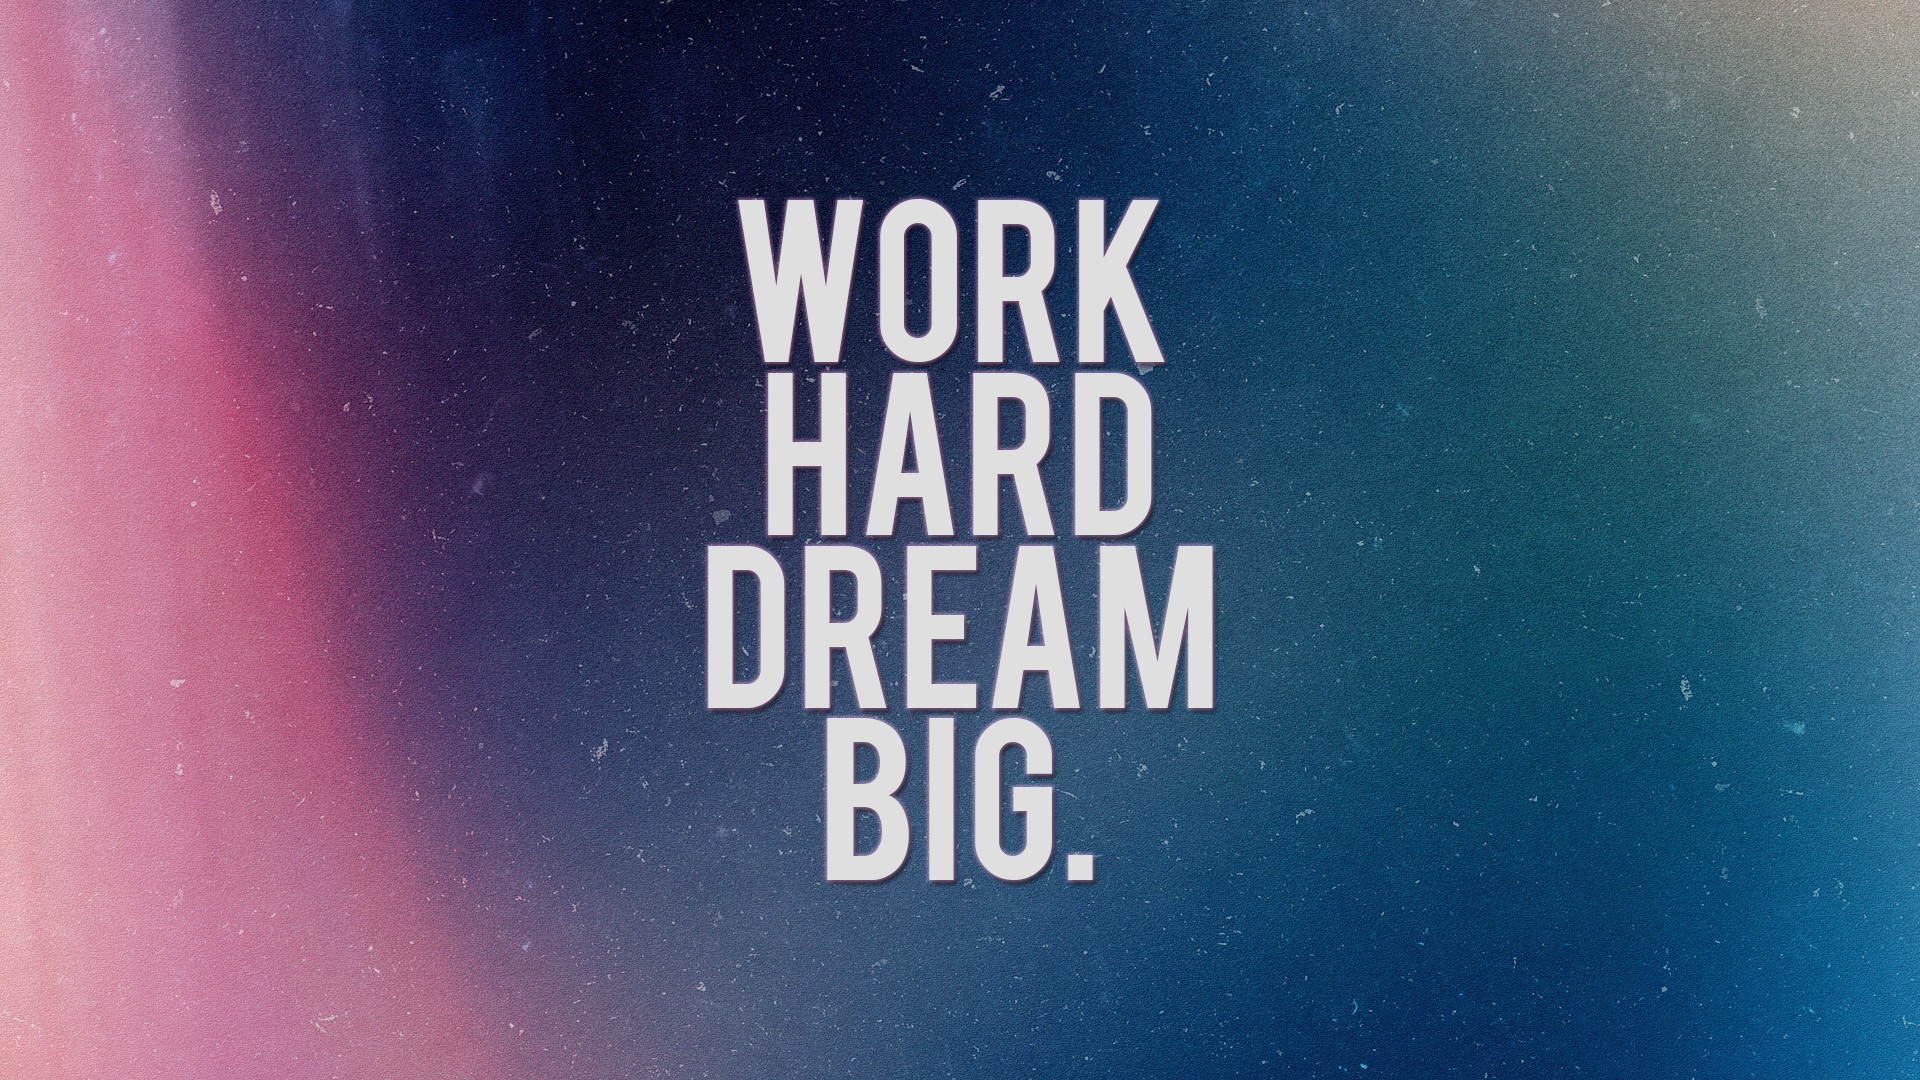 Work hard dream big Wallpaper 2618